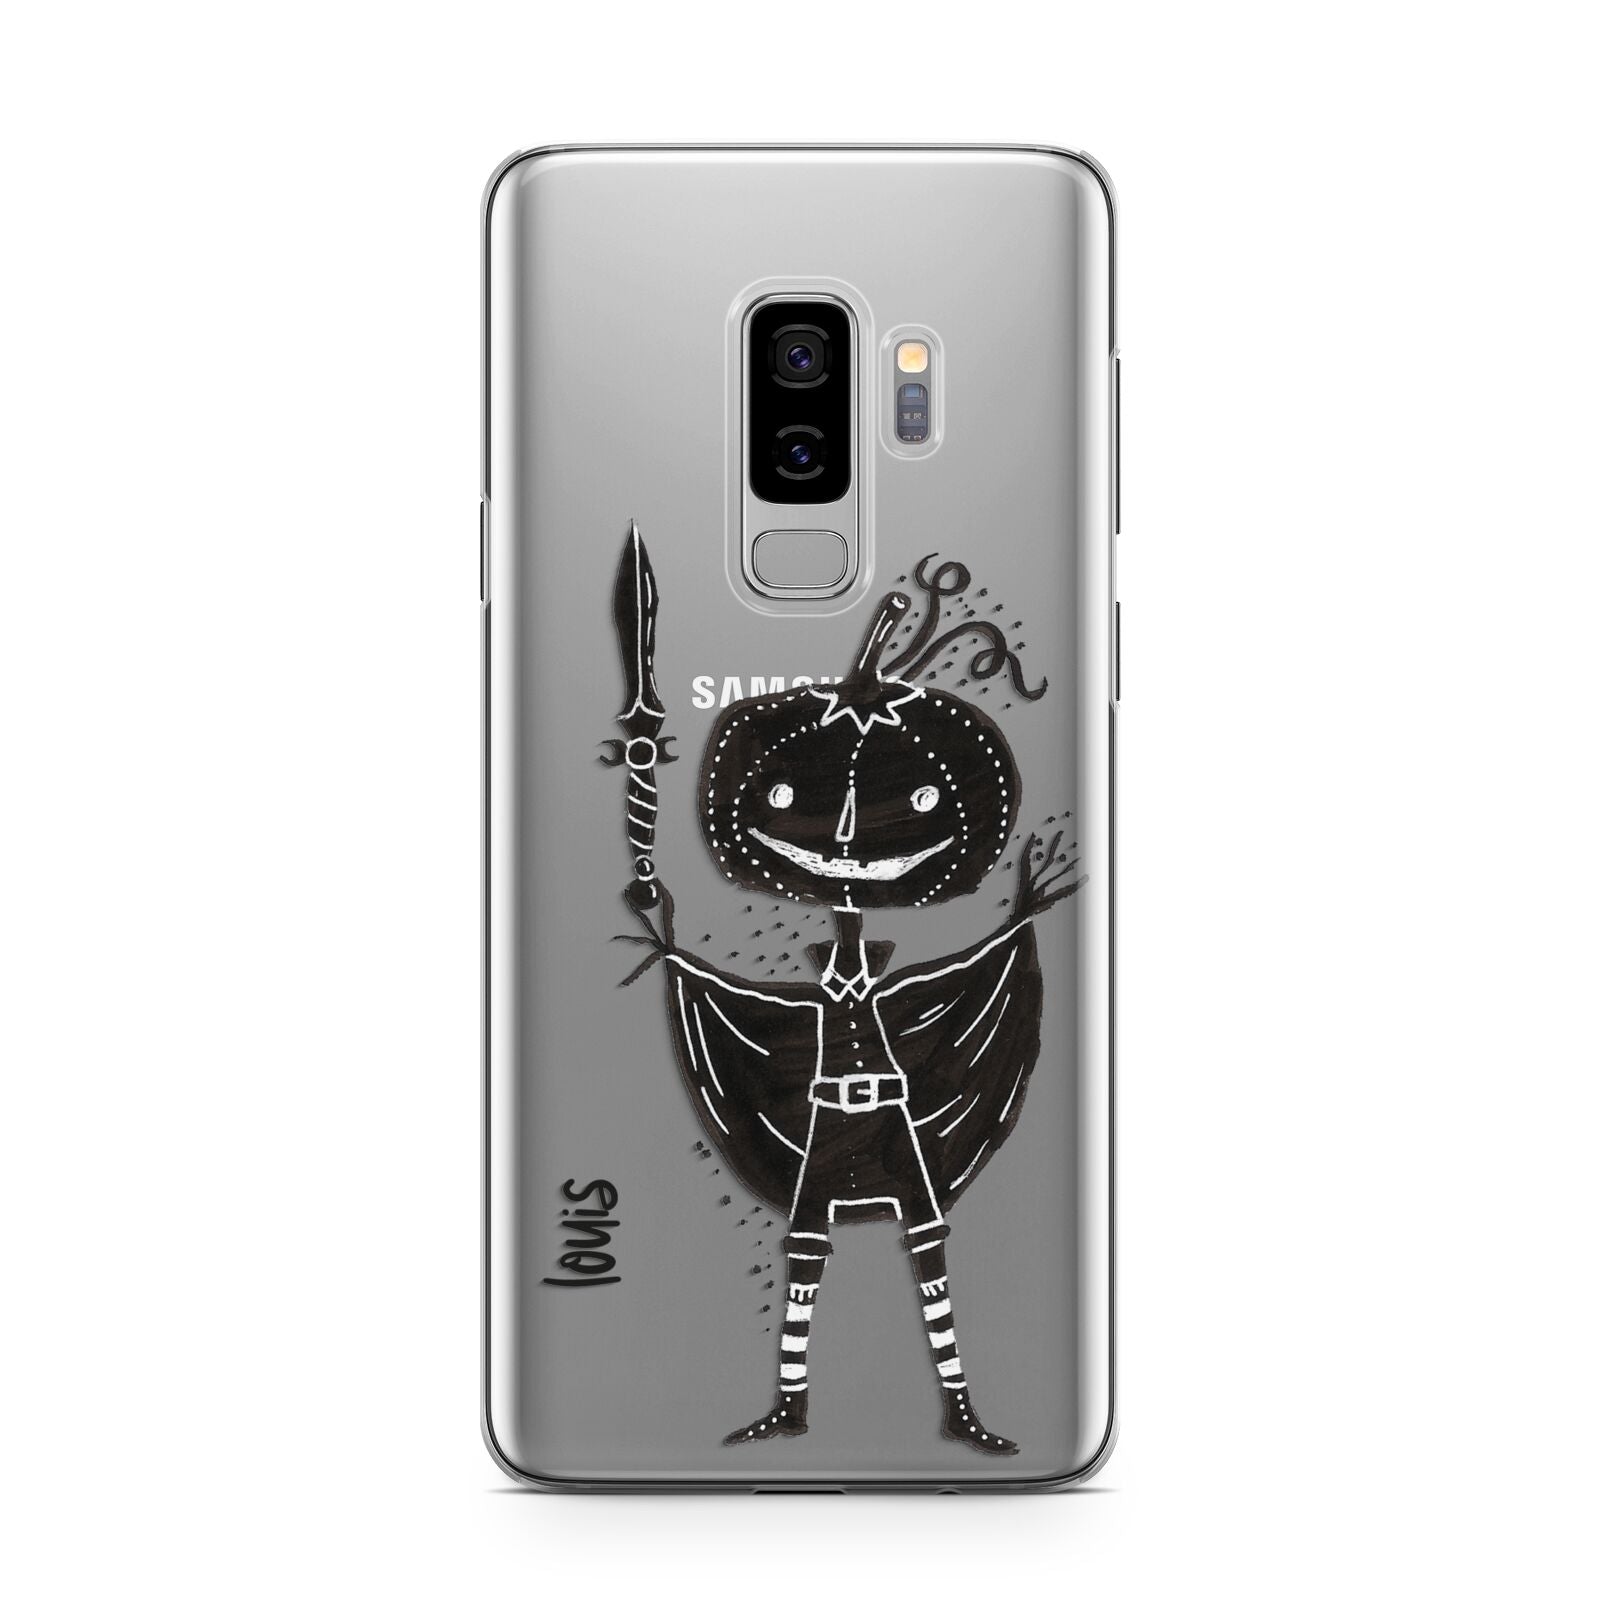 Pumpkin Head Personalised Samsung Galaxy S9 Plus Case on Silver phone